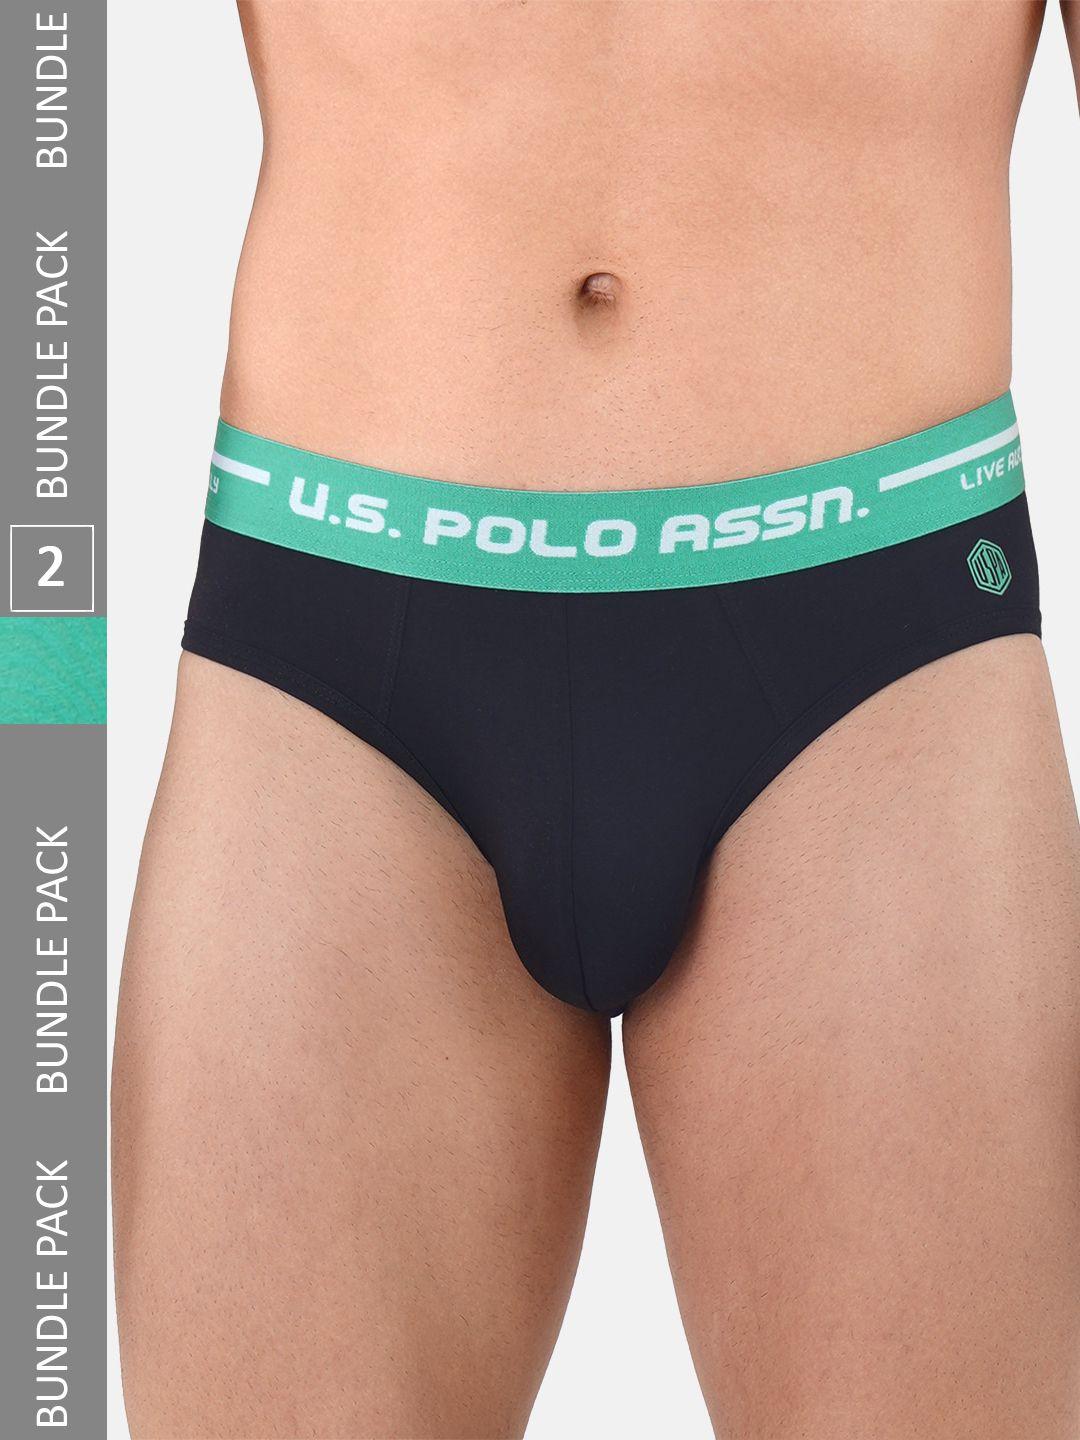 u.s.-polo-assn.-men-pack-of-2-brand-logo-printed-basic-briefs